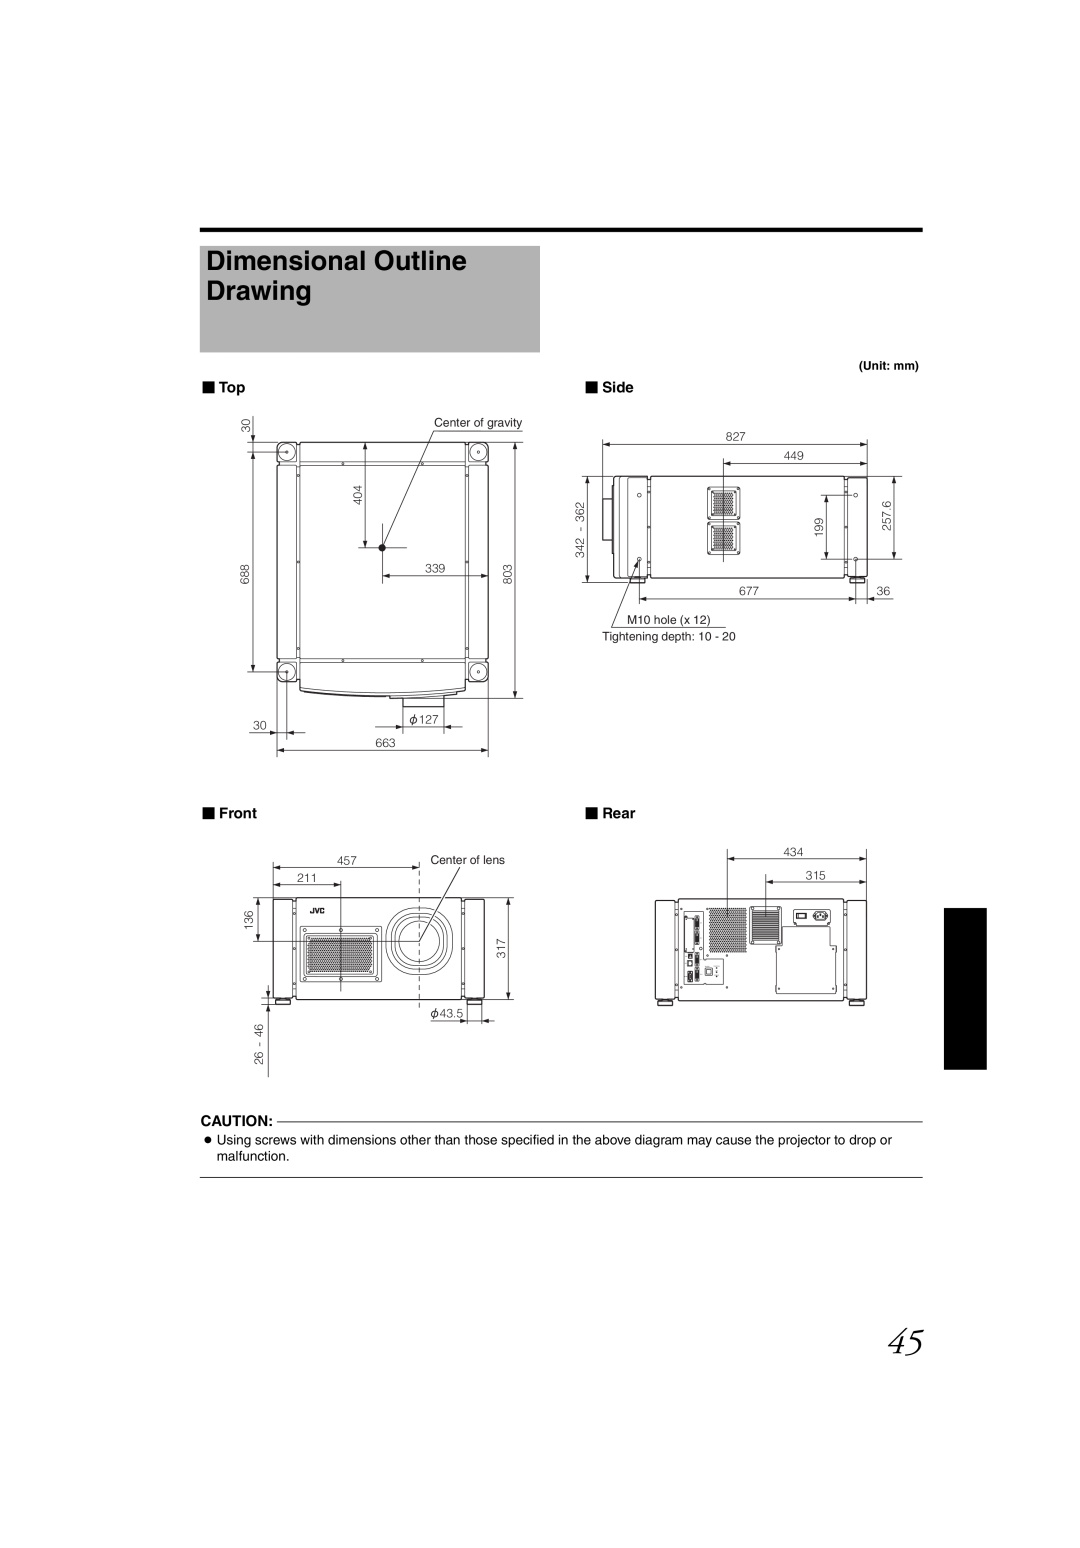 JVC DLA-SH4K instruction manual Dimensional Outline Drawing,  Top,  Side,  Front,  Rear, Unit mm 